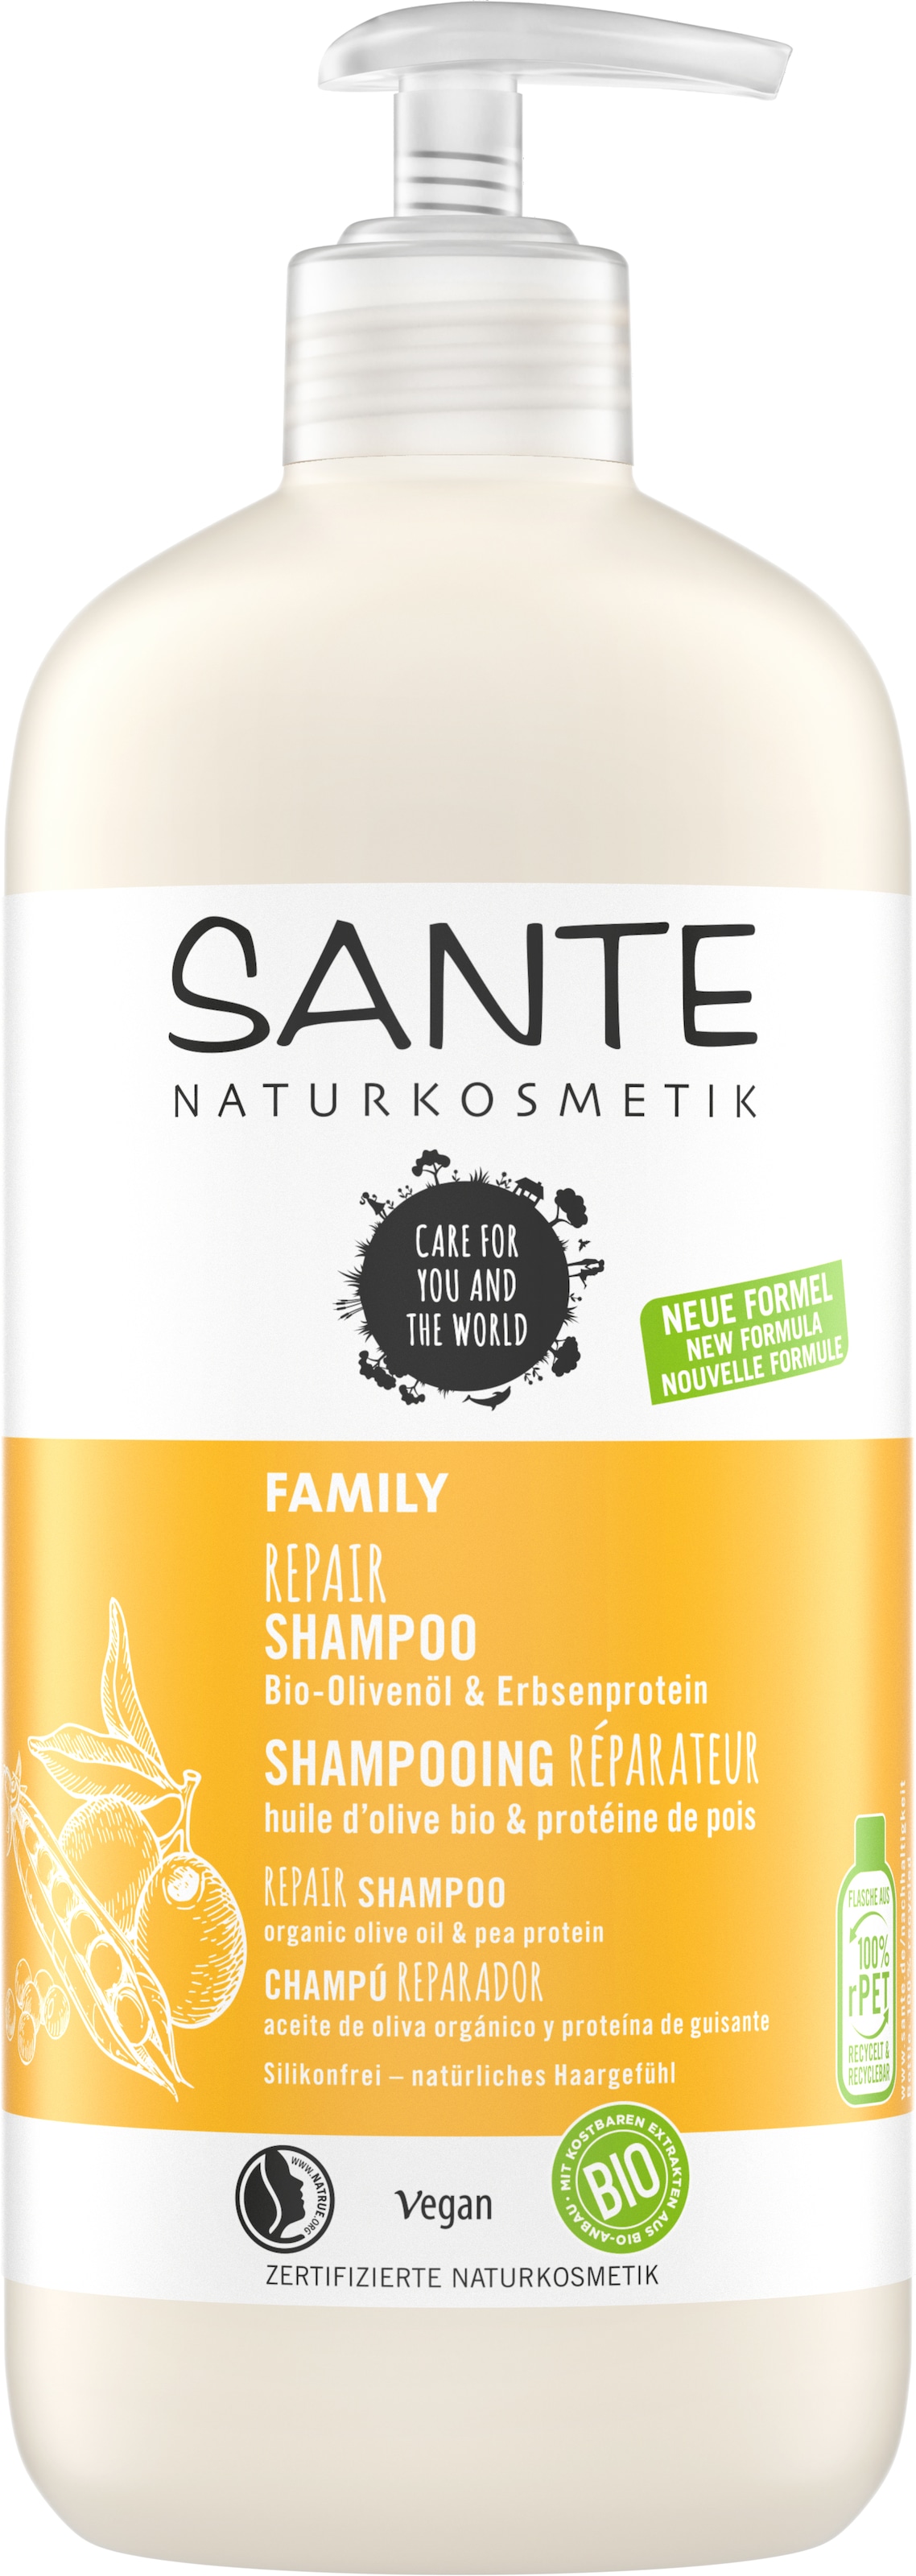 »FAMILY Repair OTTO SANTE bei online Bio-Olivenöl« Haarshampoo